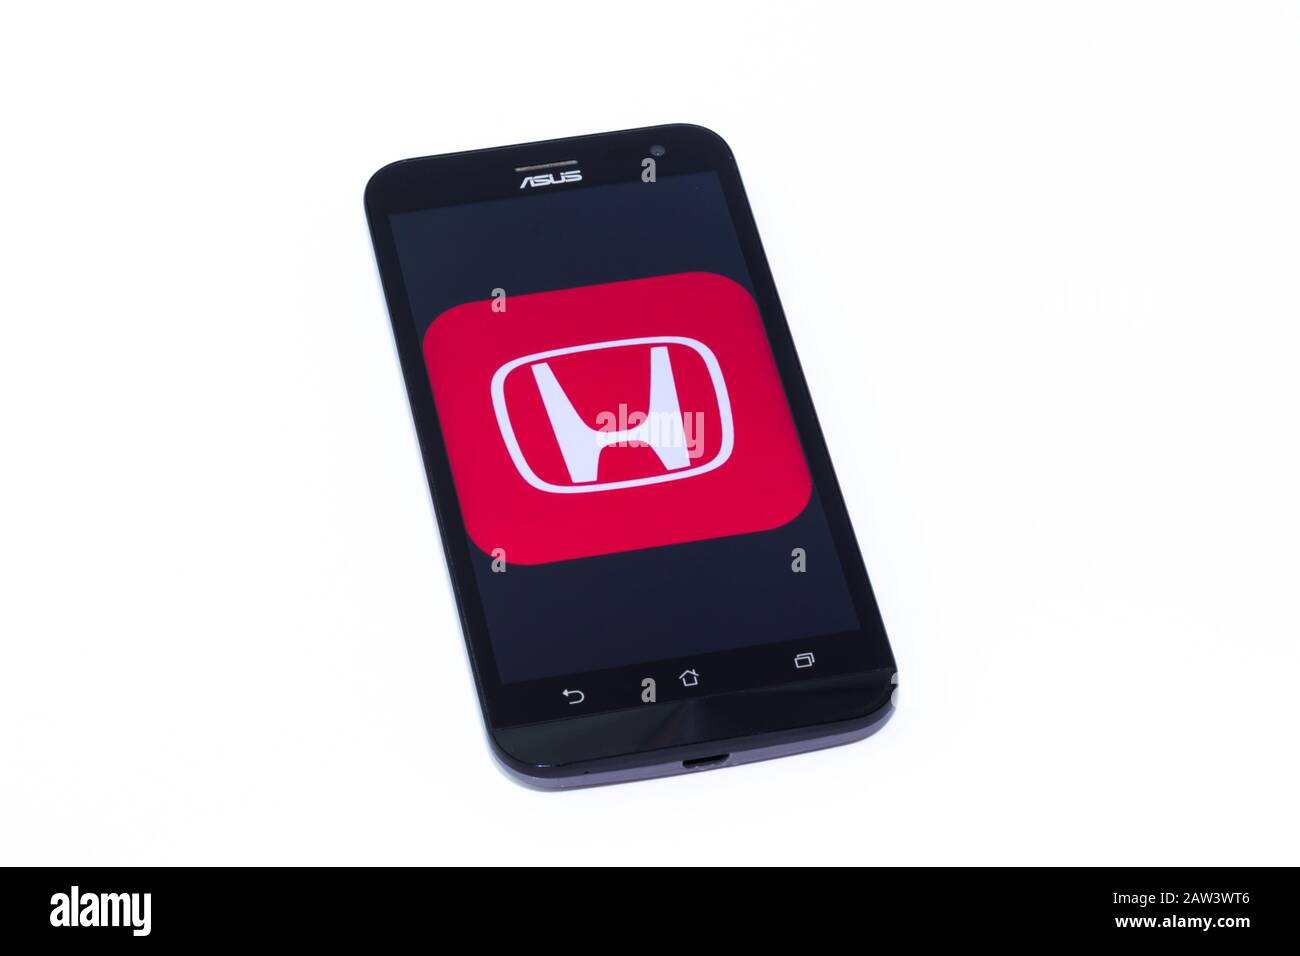 Kouvola, Finland - 23 January 2020: Honda app logo on the screen of smartphone Asus Stock Photo